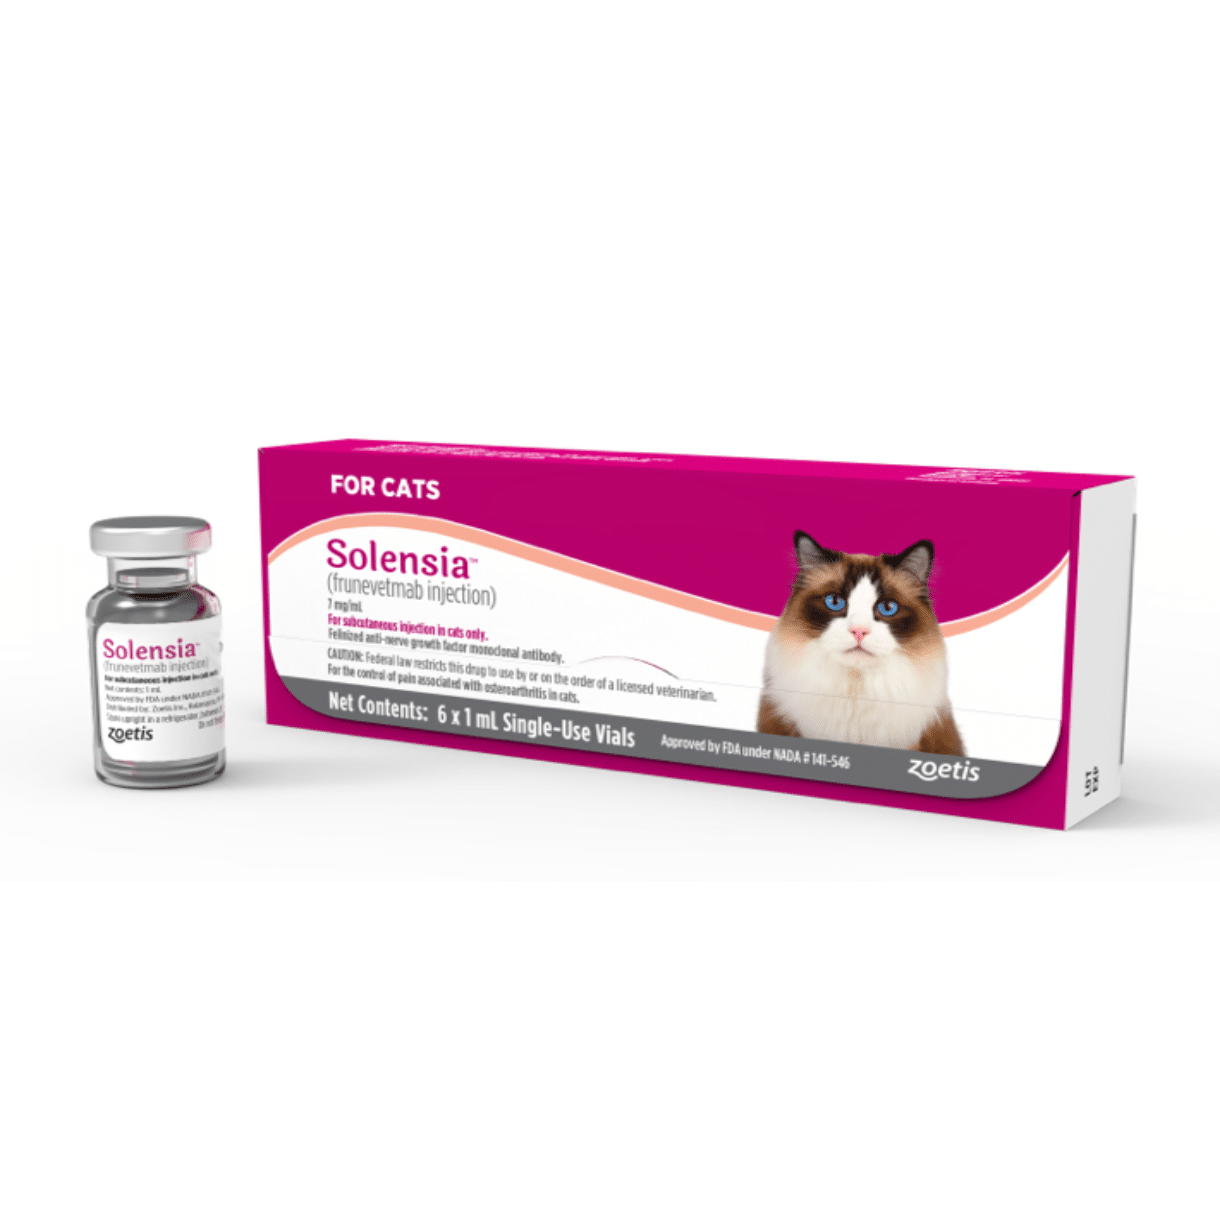 Solensia™ (frunevetmab injection)